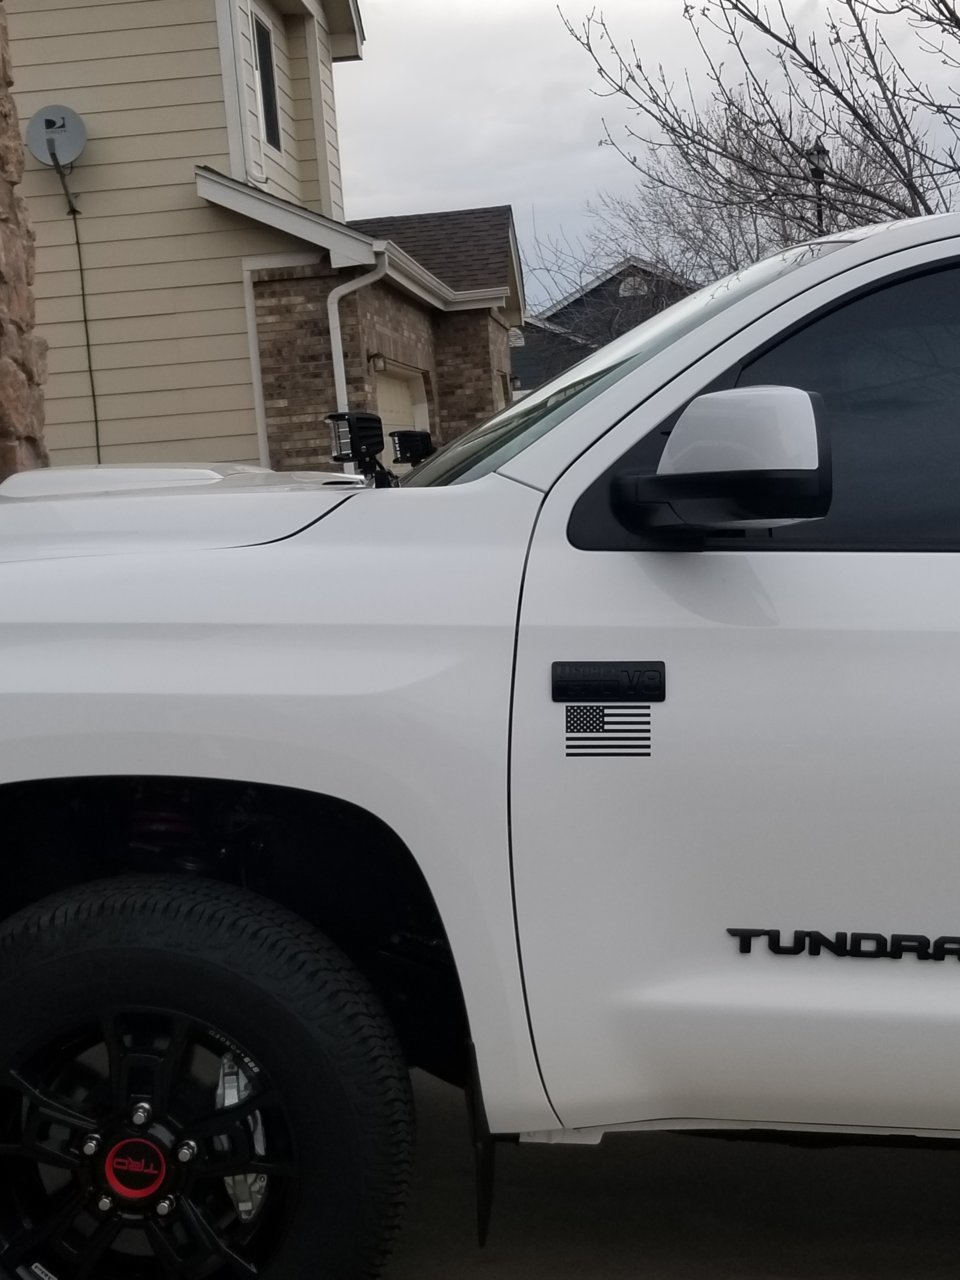 2019 Tundra TRD pro mods | Toyota Tundra Forum